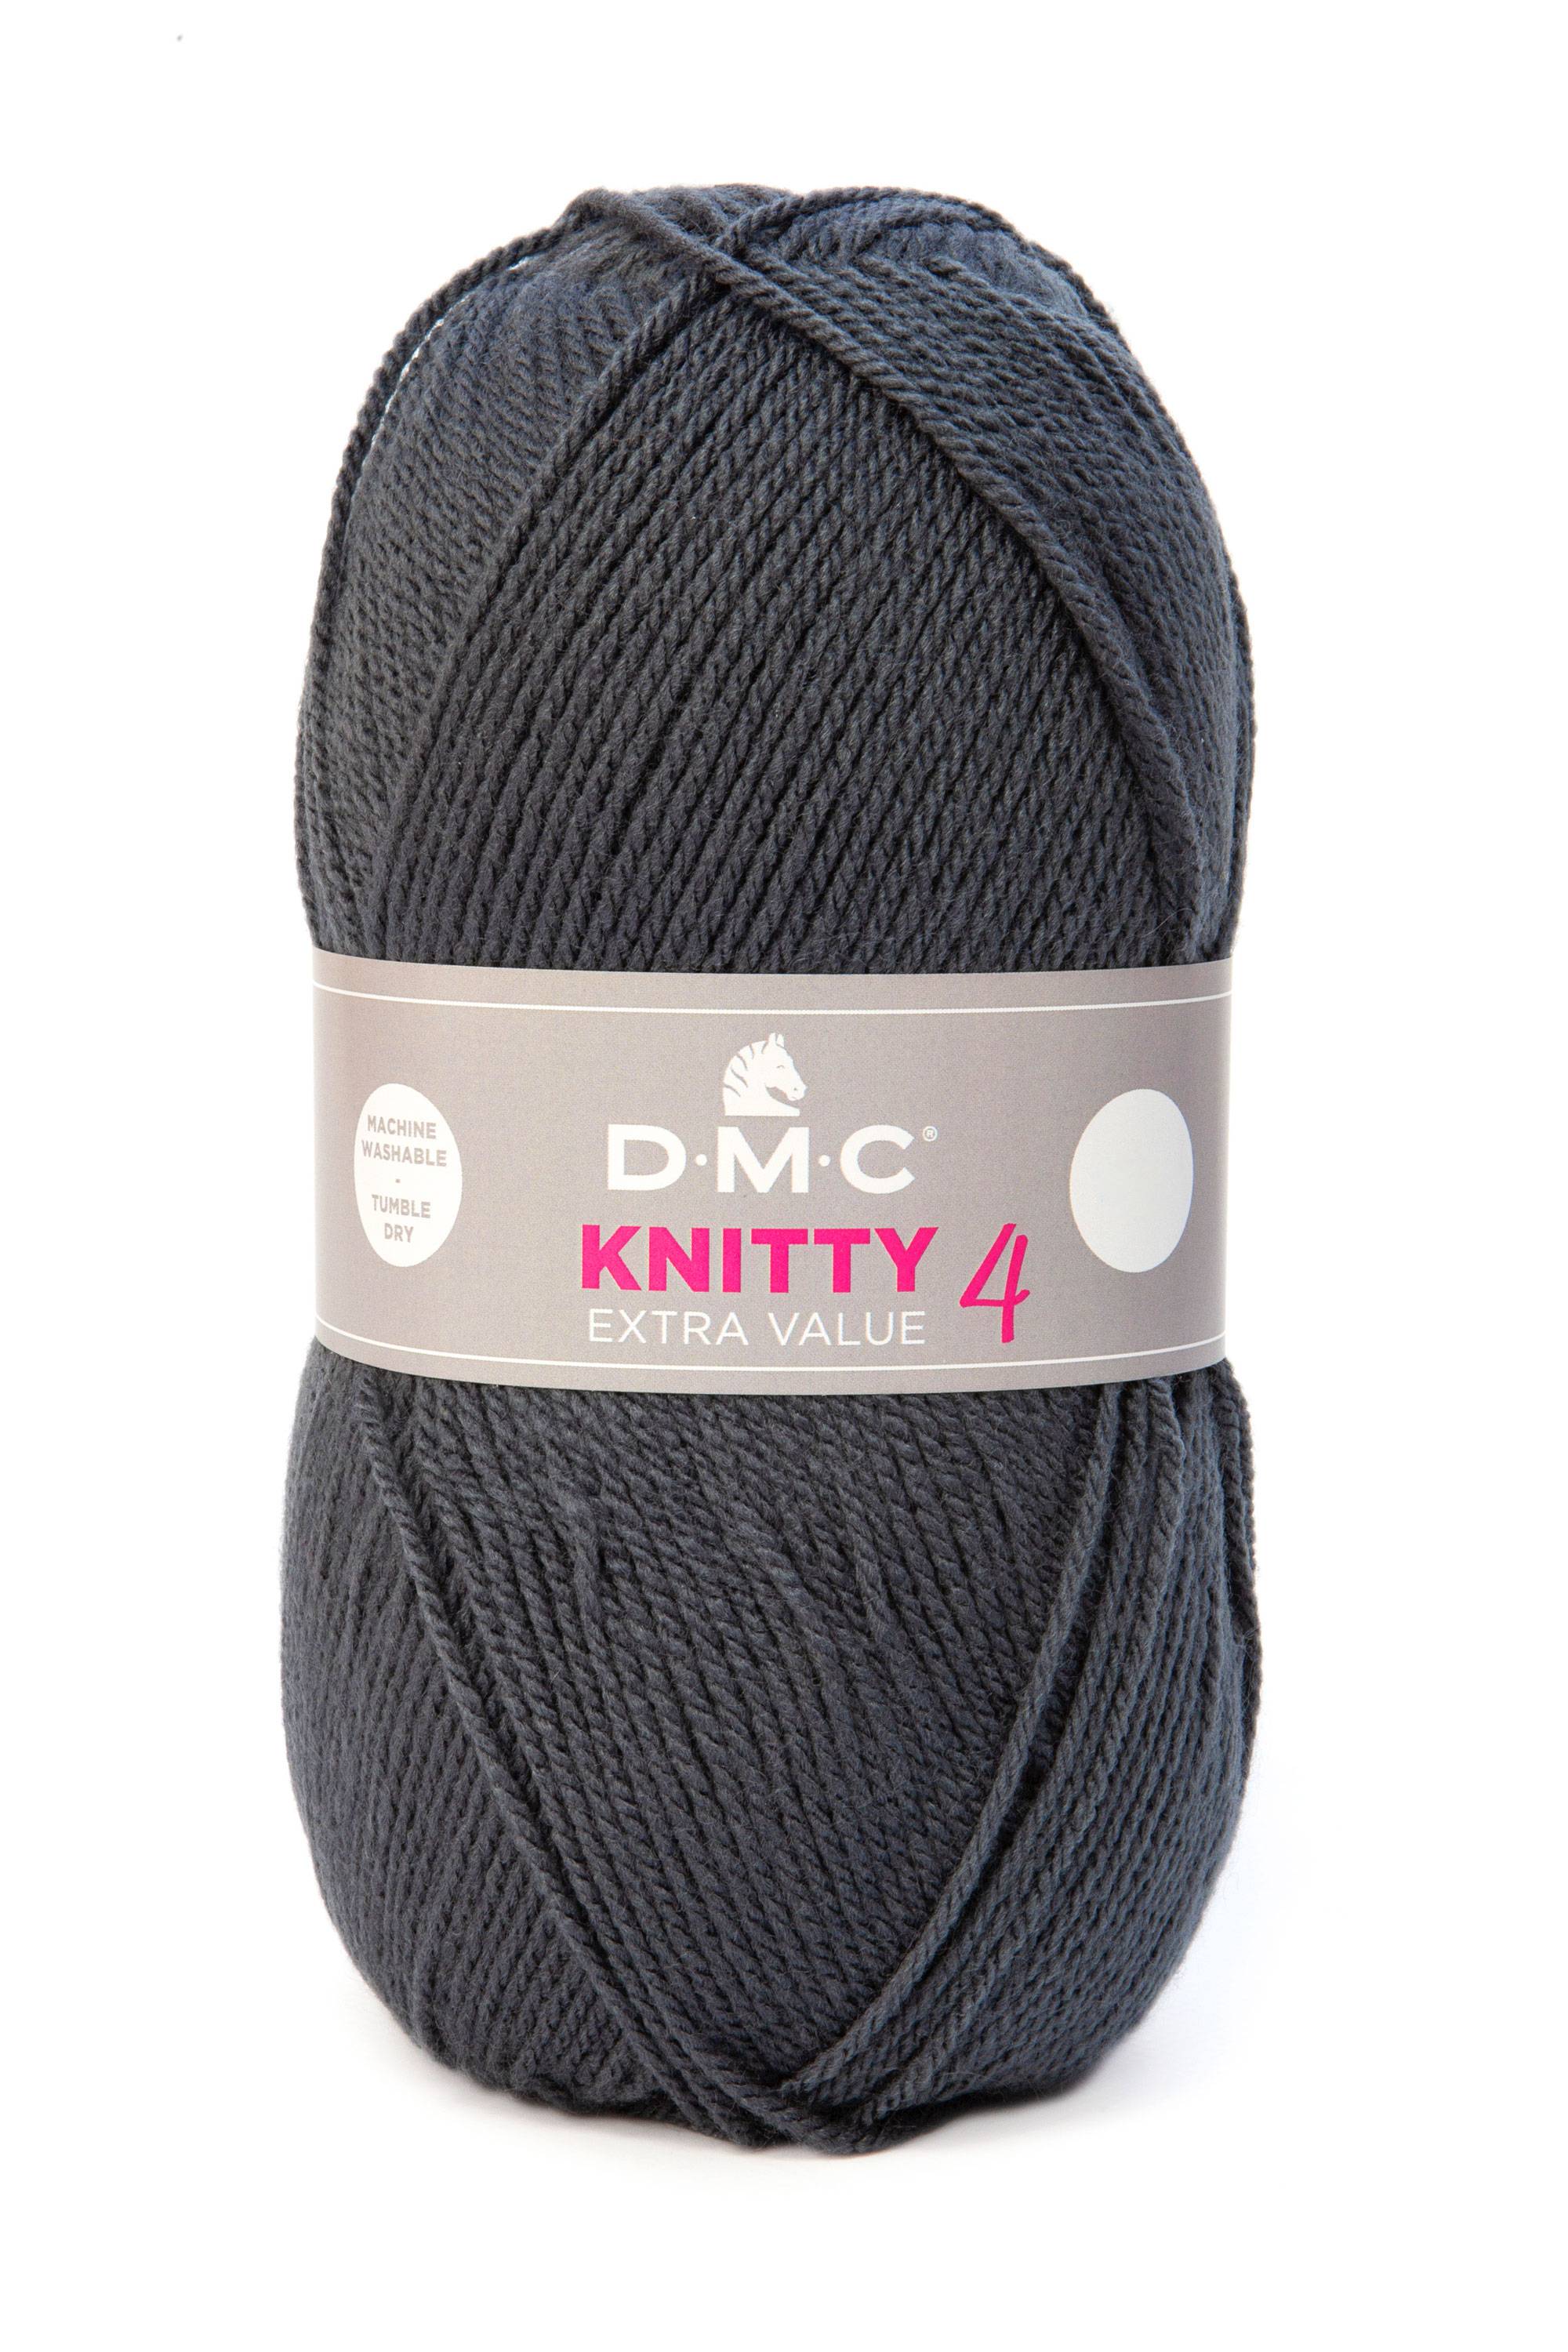 Lana Dmc Knitty 4 Colore 633